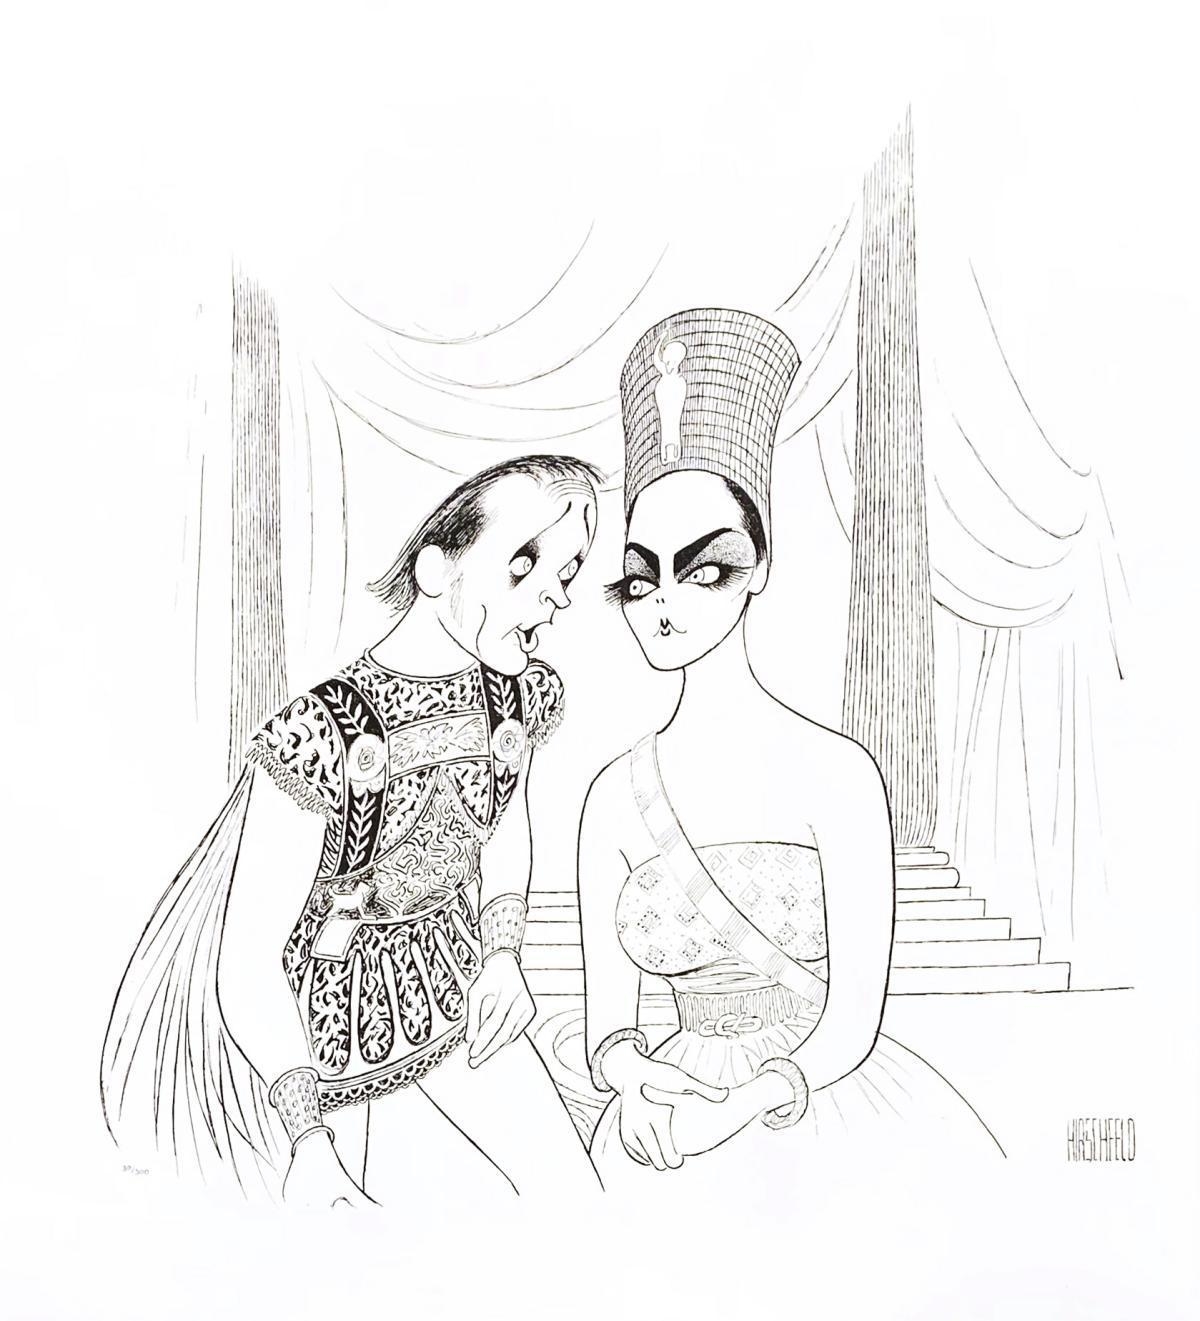 "Anthony & Cleopatra" - Al Hirschfeld